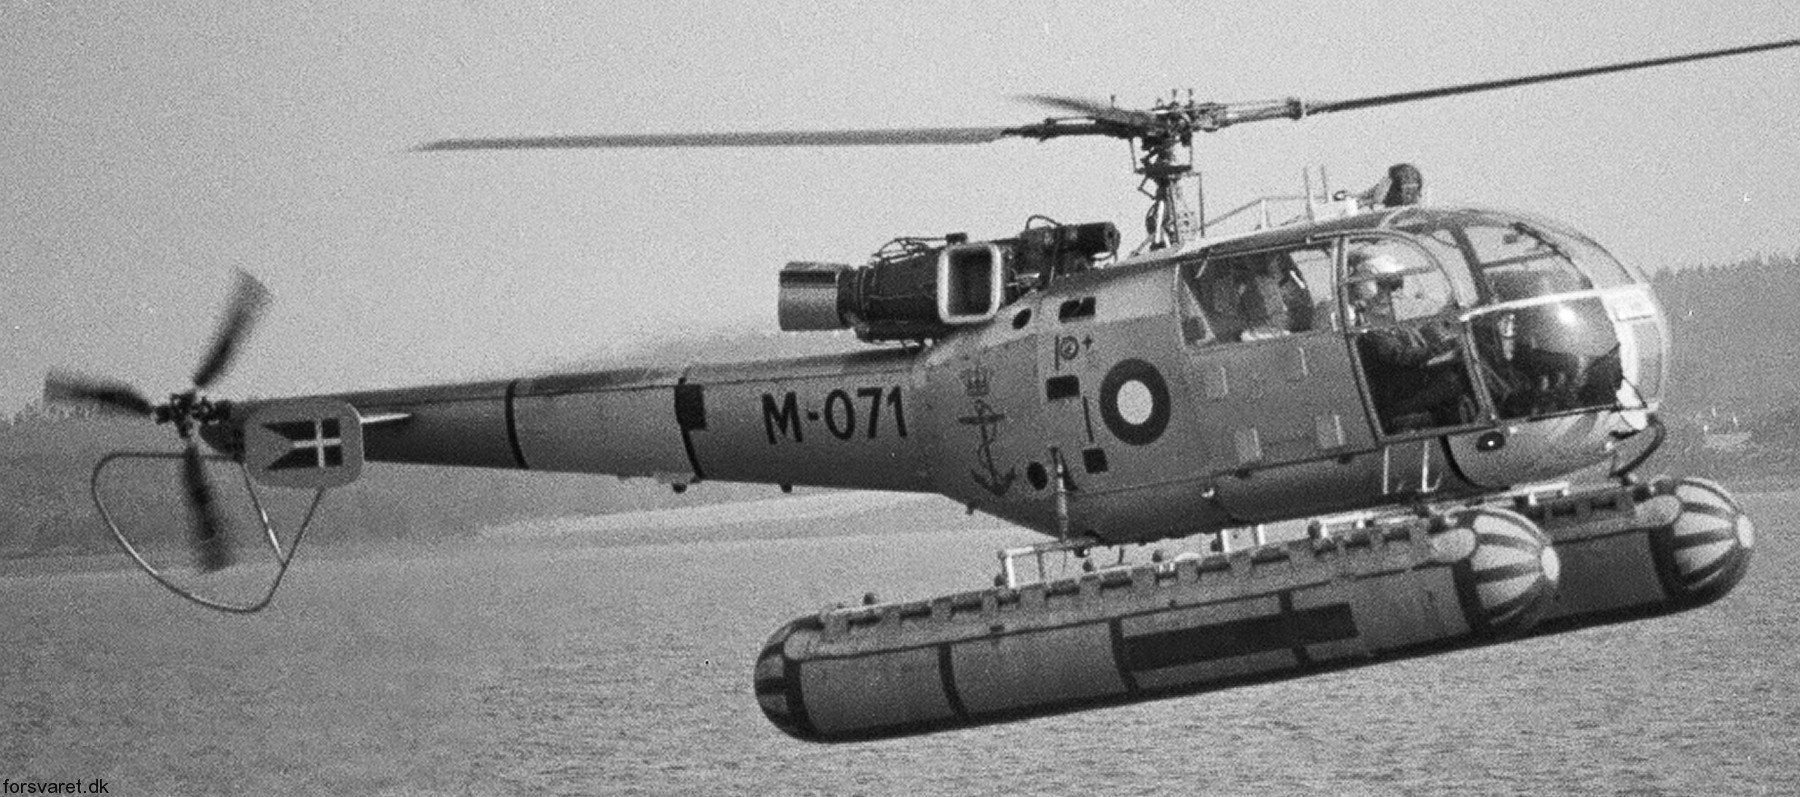 sa 316b alouette iii helicopter royal danish navy søværnet kongelige danske marine sud aviation m-071 10